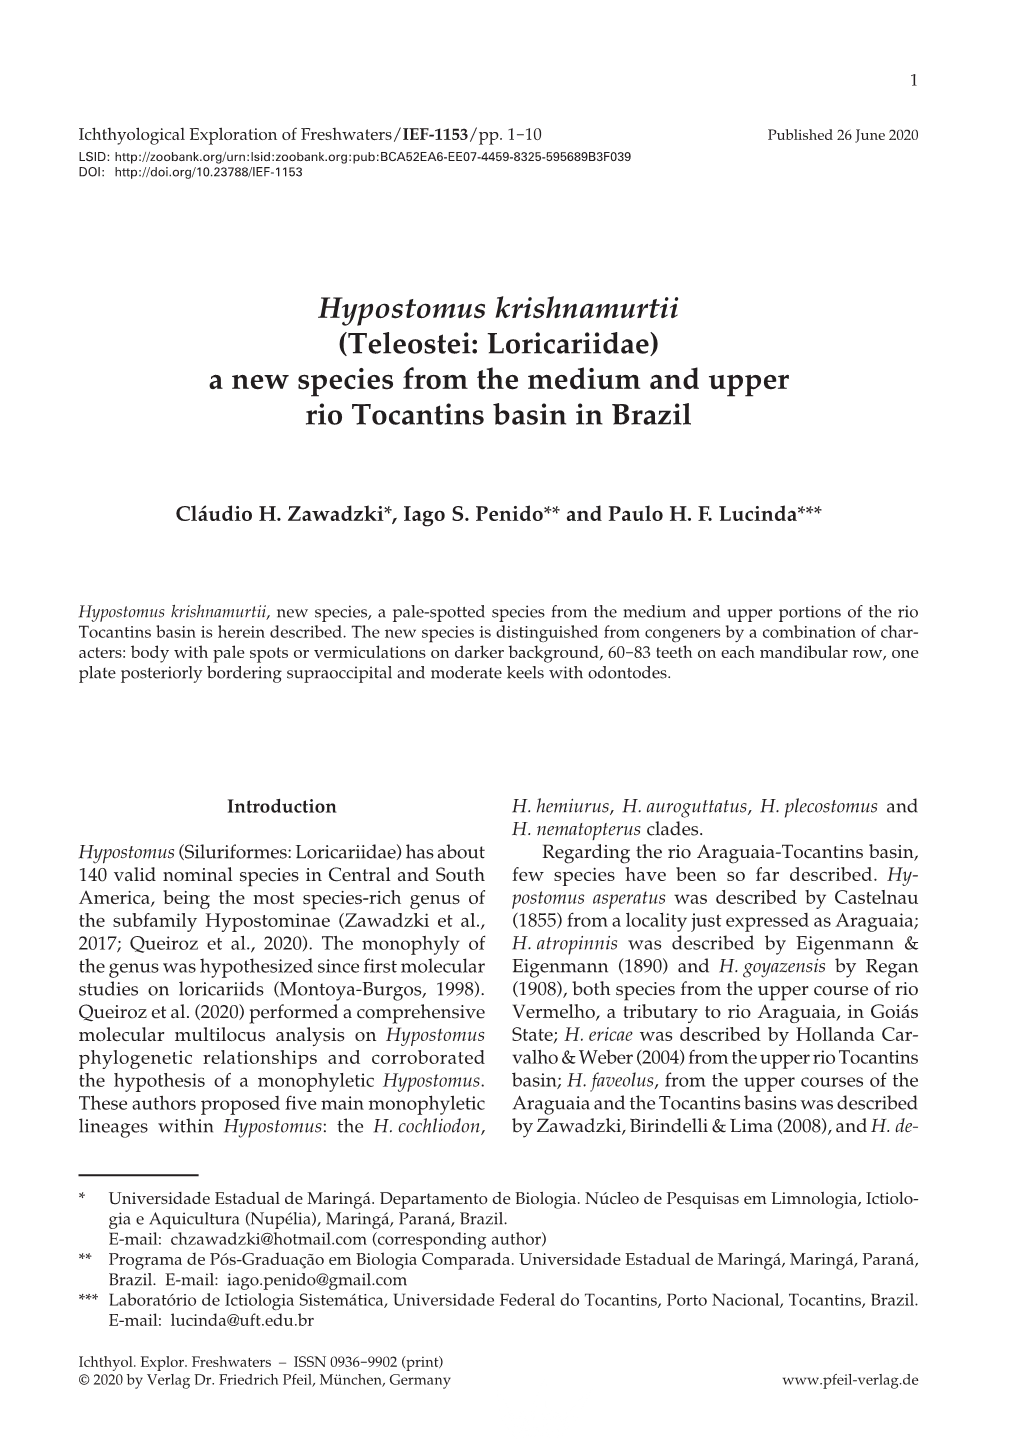 Hypostomus Krishnamurtii (Teleostei: Loricariidae) a New Species from the Medium and Upper Rio Tocantins Basin in Brazil